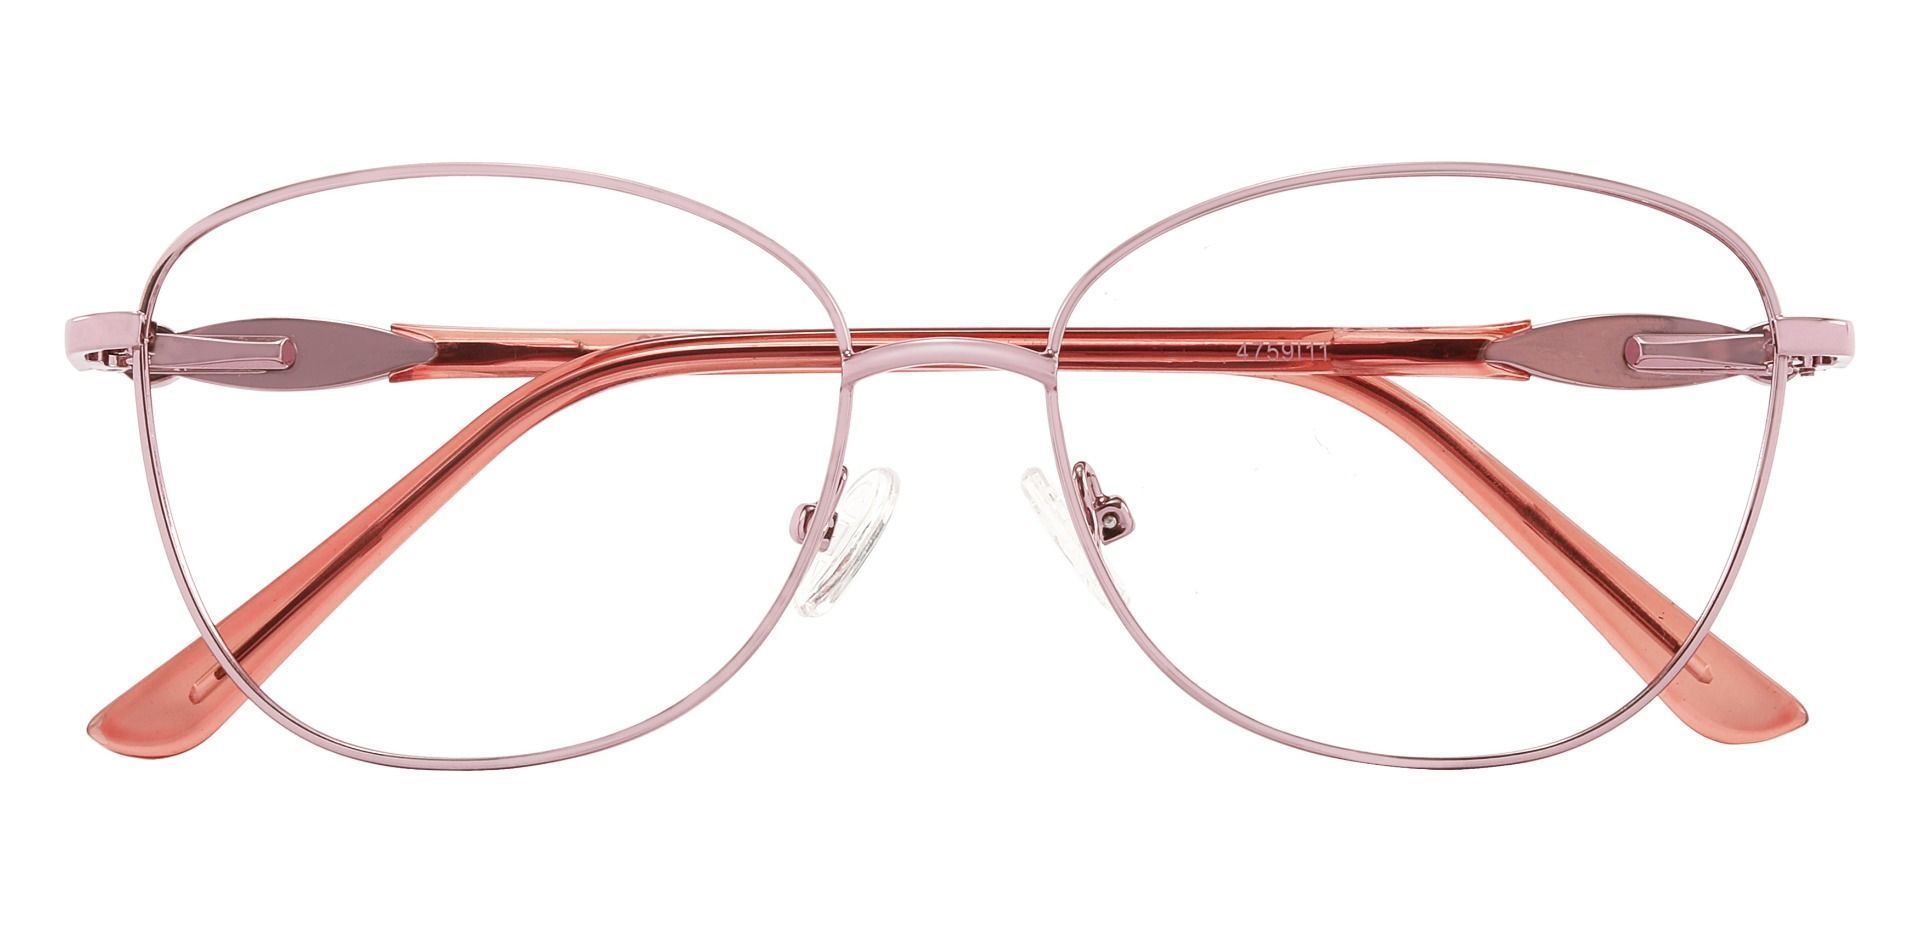 Almena Oval Progressive Glasses - Pink